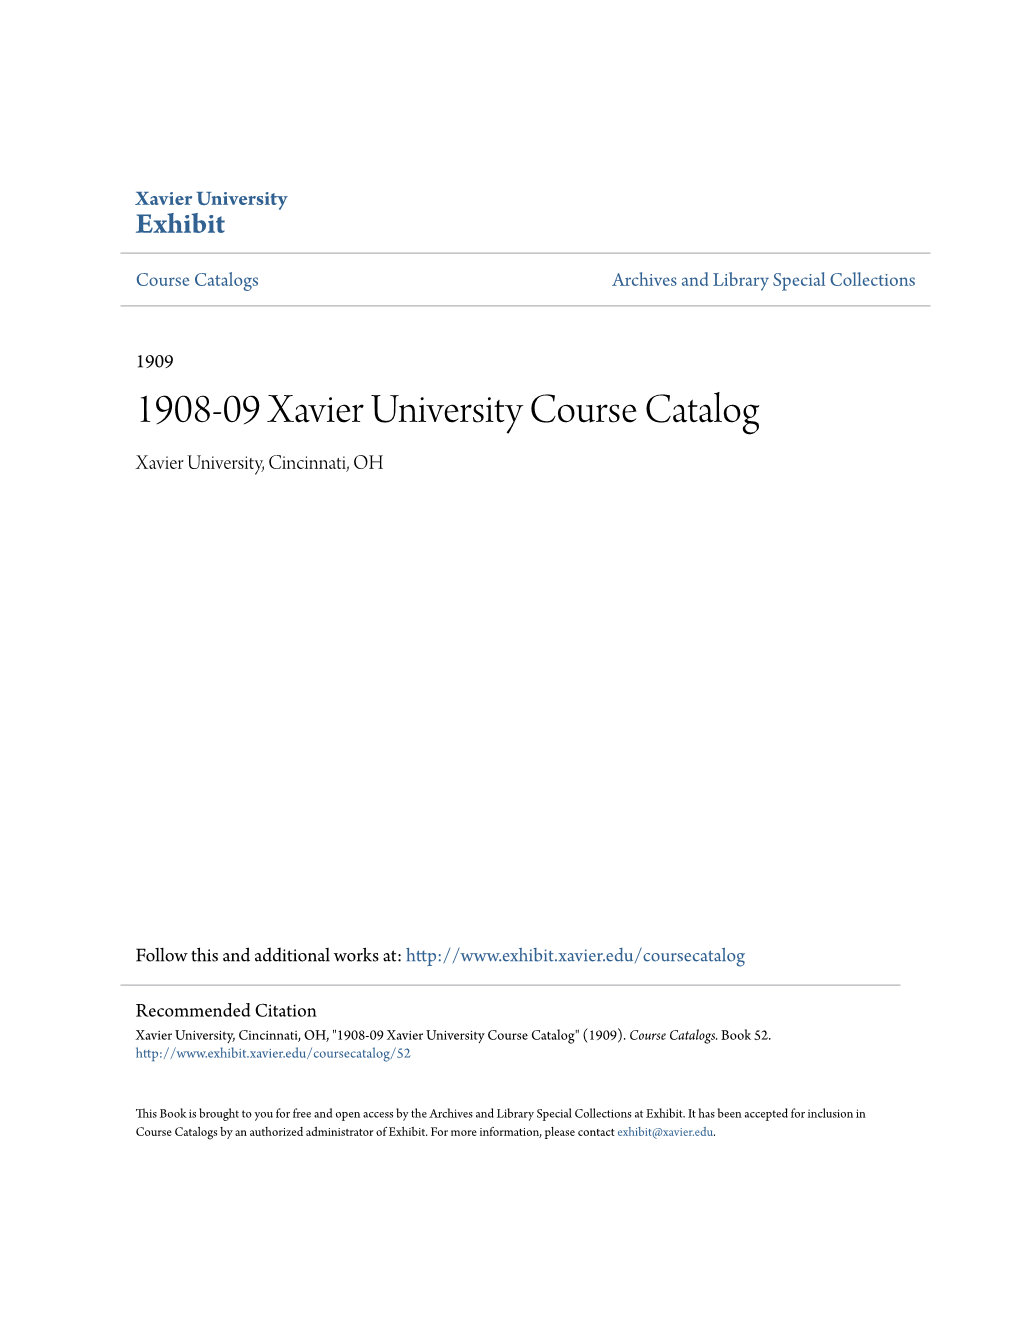 1908-09 Xavier University Course Catalog Xavier University, Cincinnati, OH